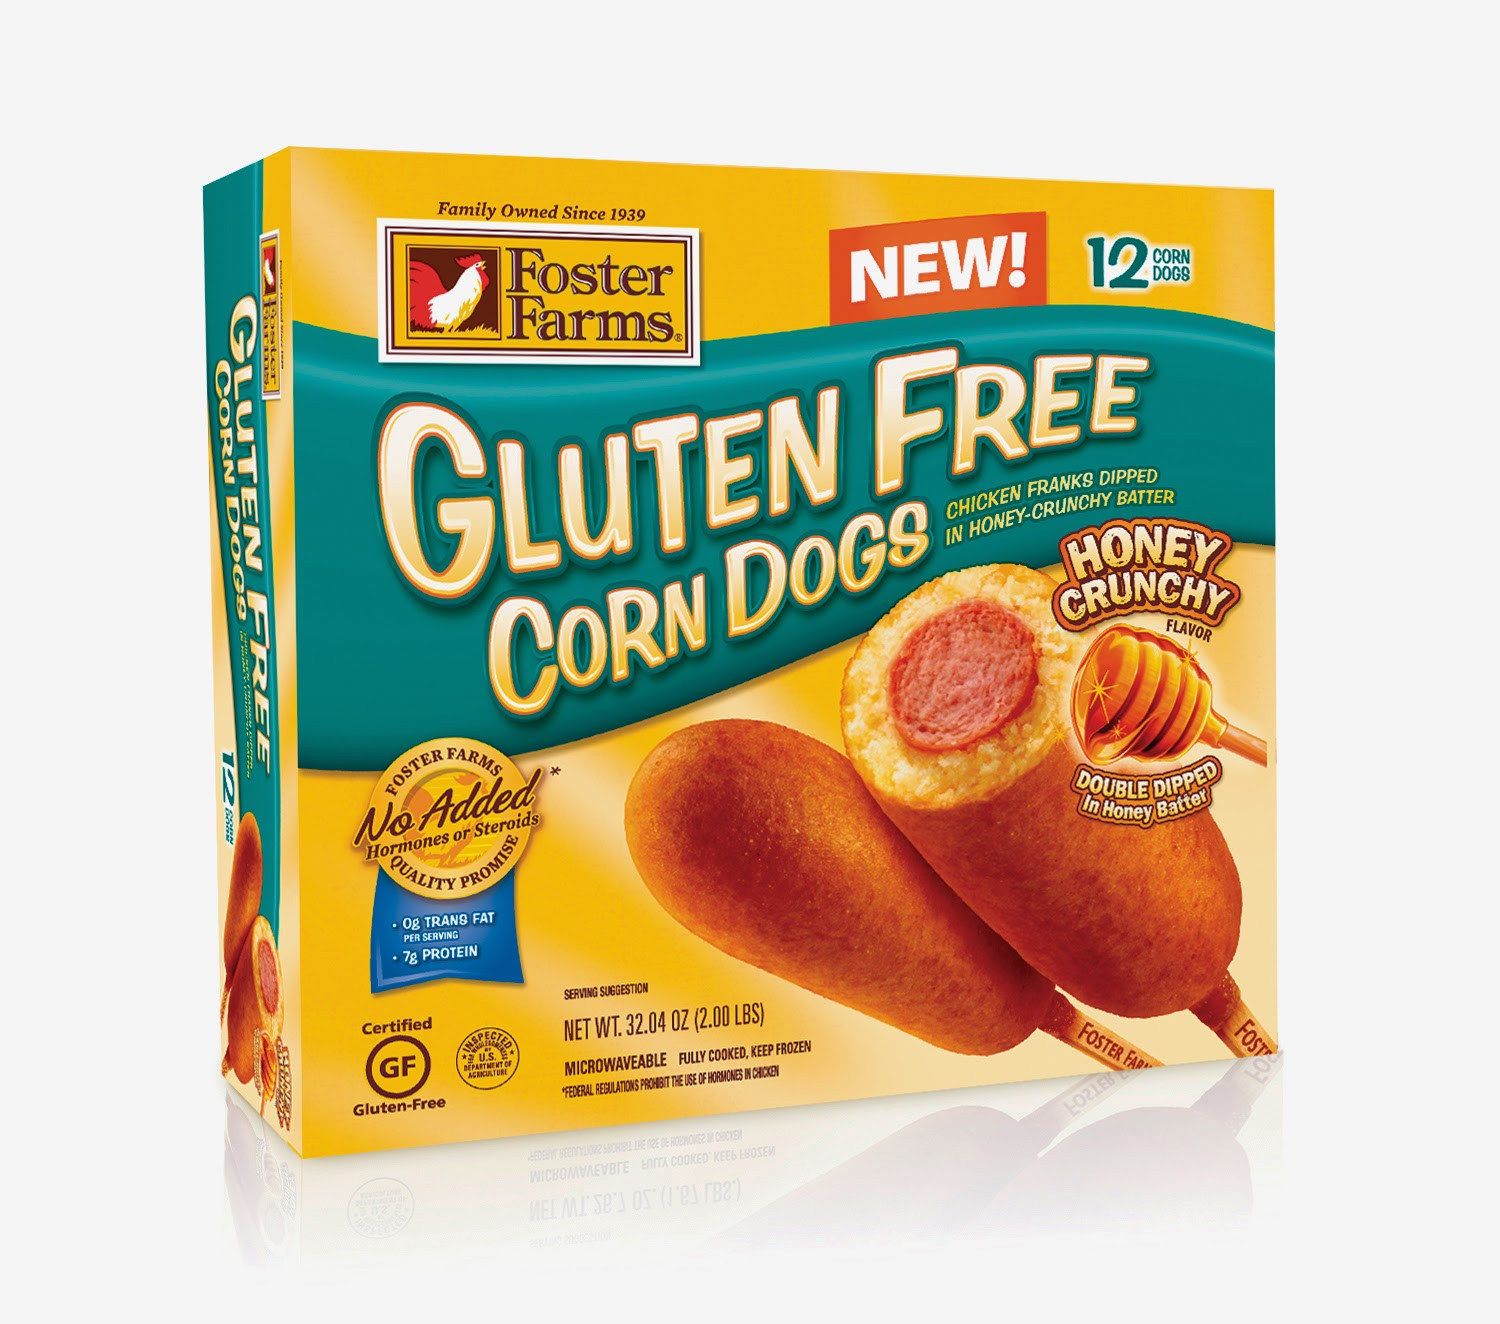 Gluten Free Corn Dogs
 Heart Zipper Foster Farms Gluten Free Corndogs Review